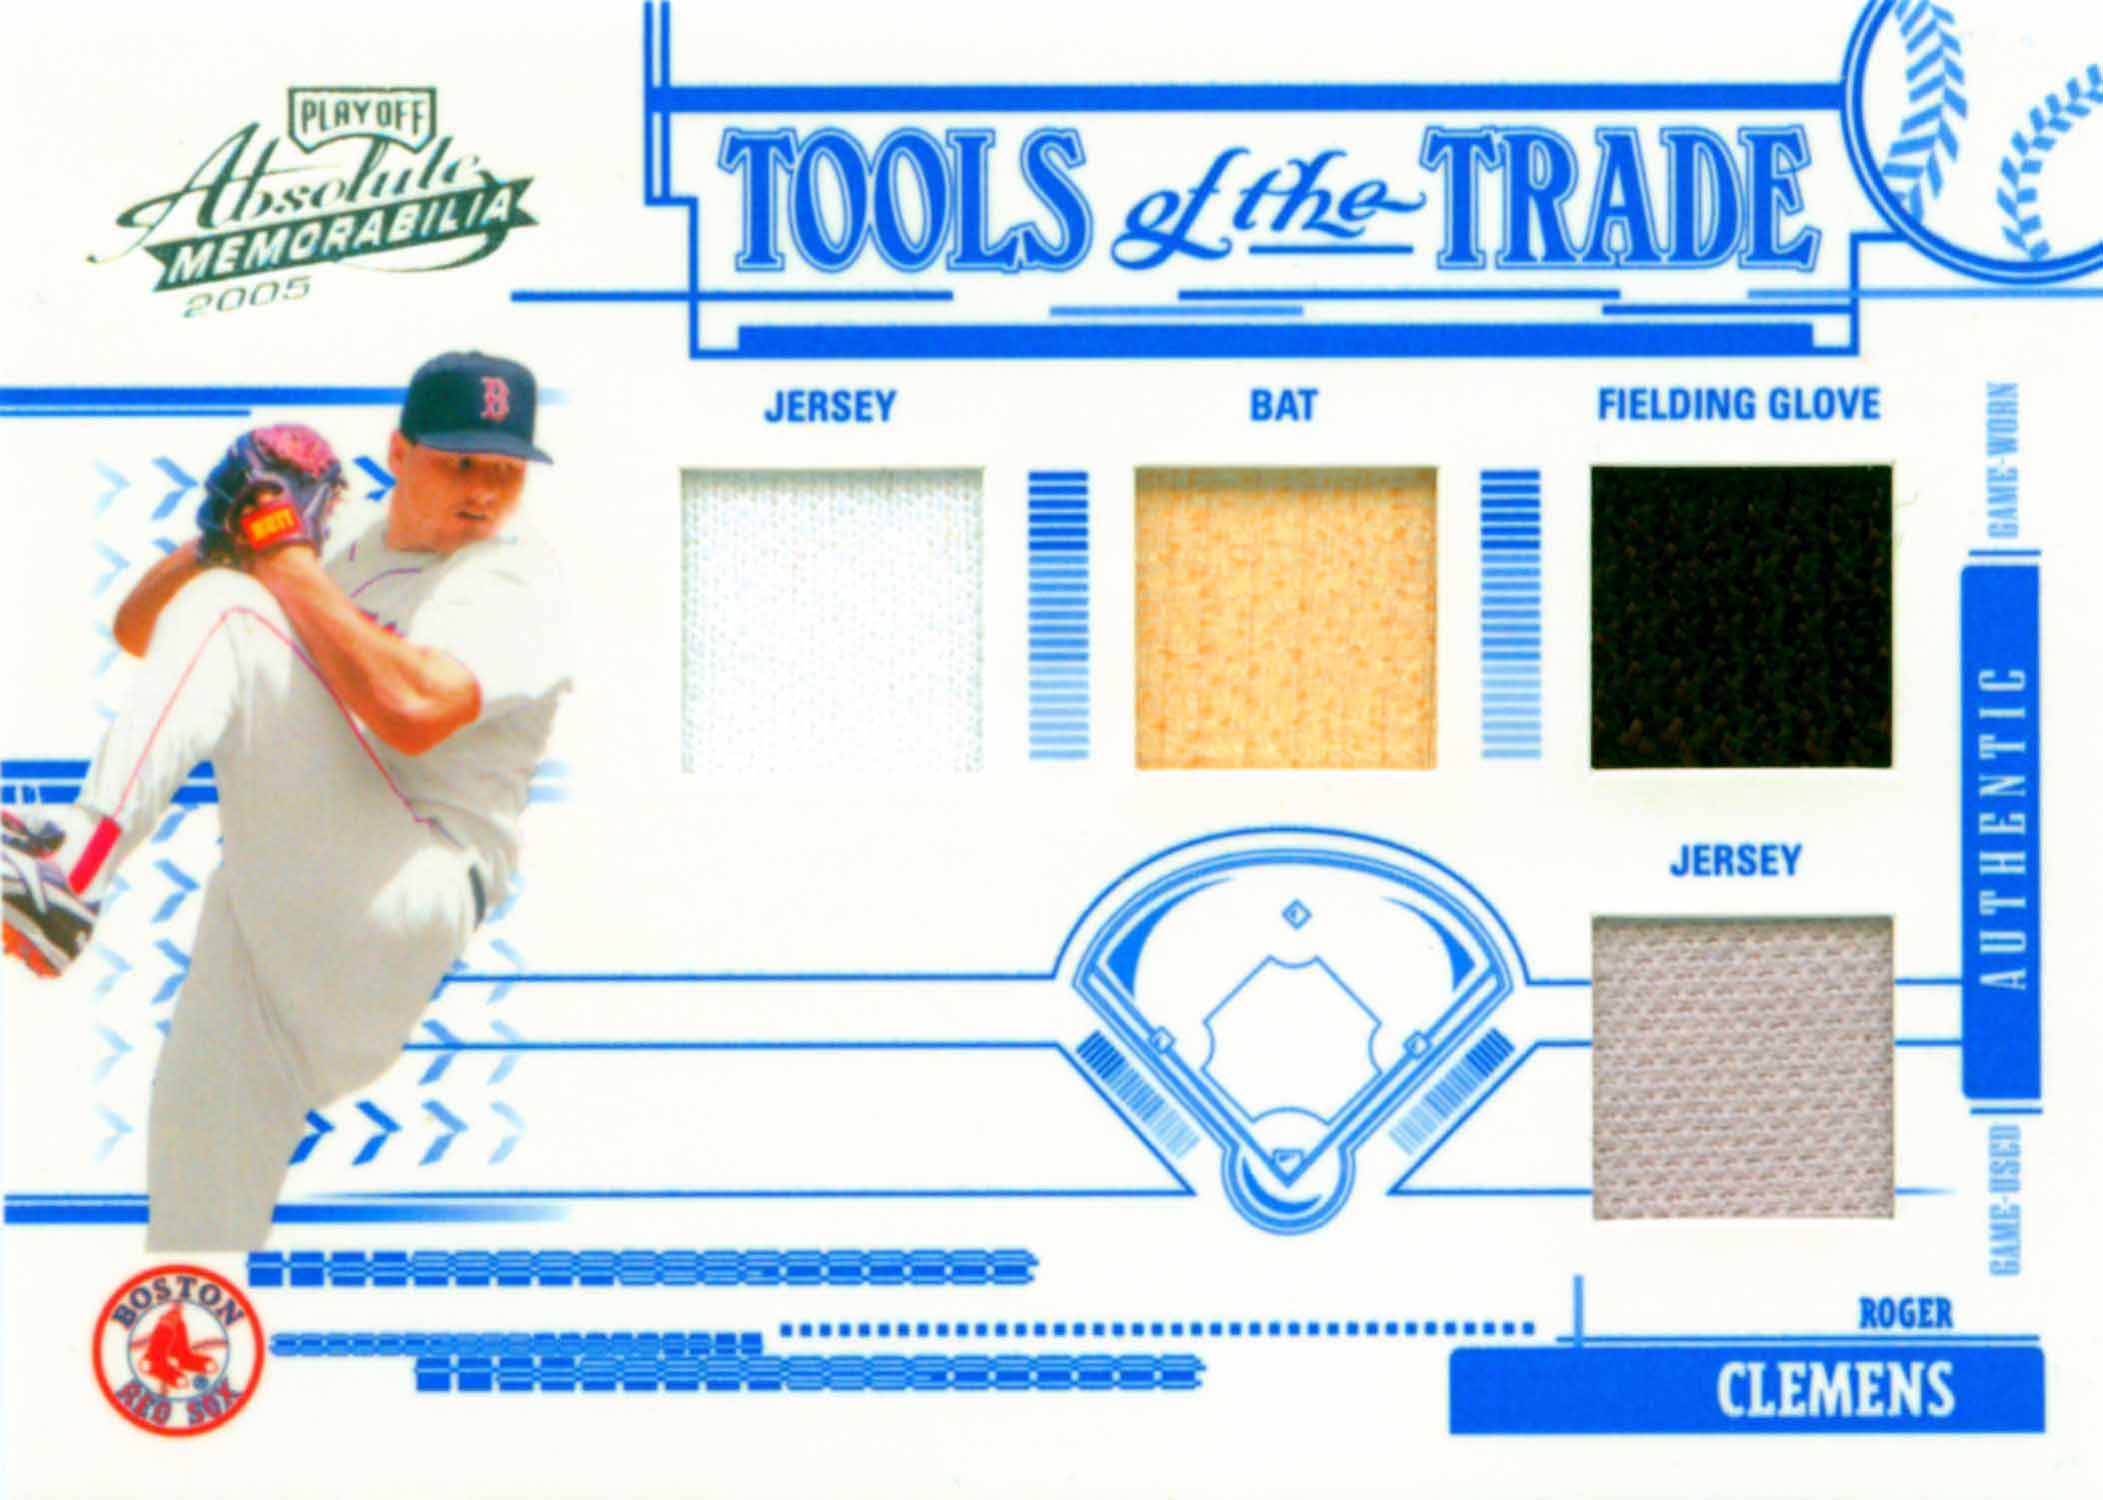 2005 Absolute Memorabilia Tools of the Trade Swatch Quad Bat-Fielding Glove-Jerseys